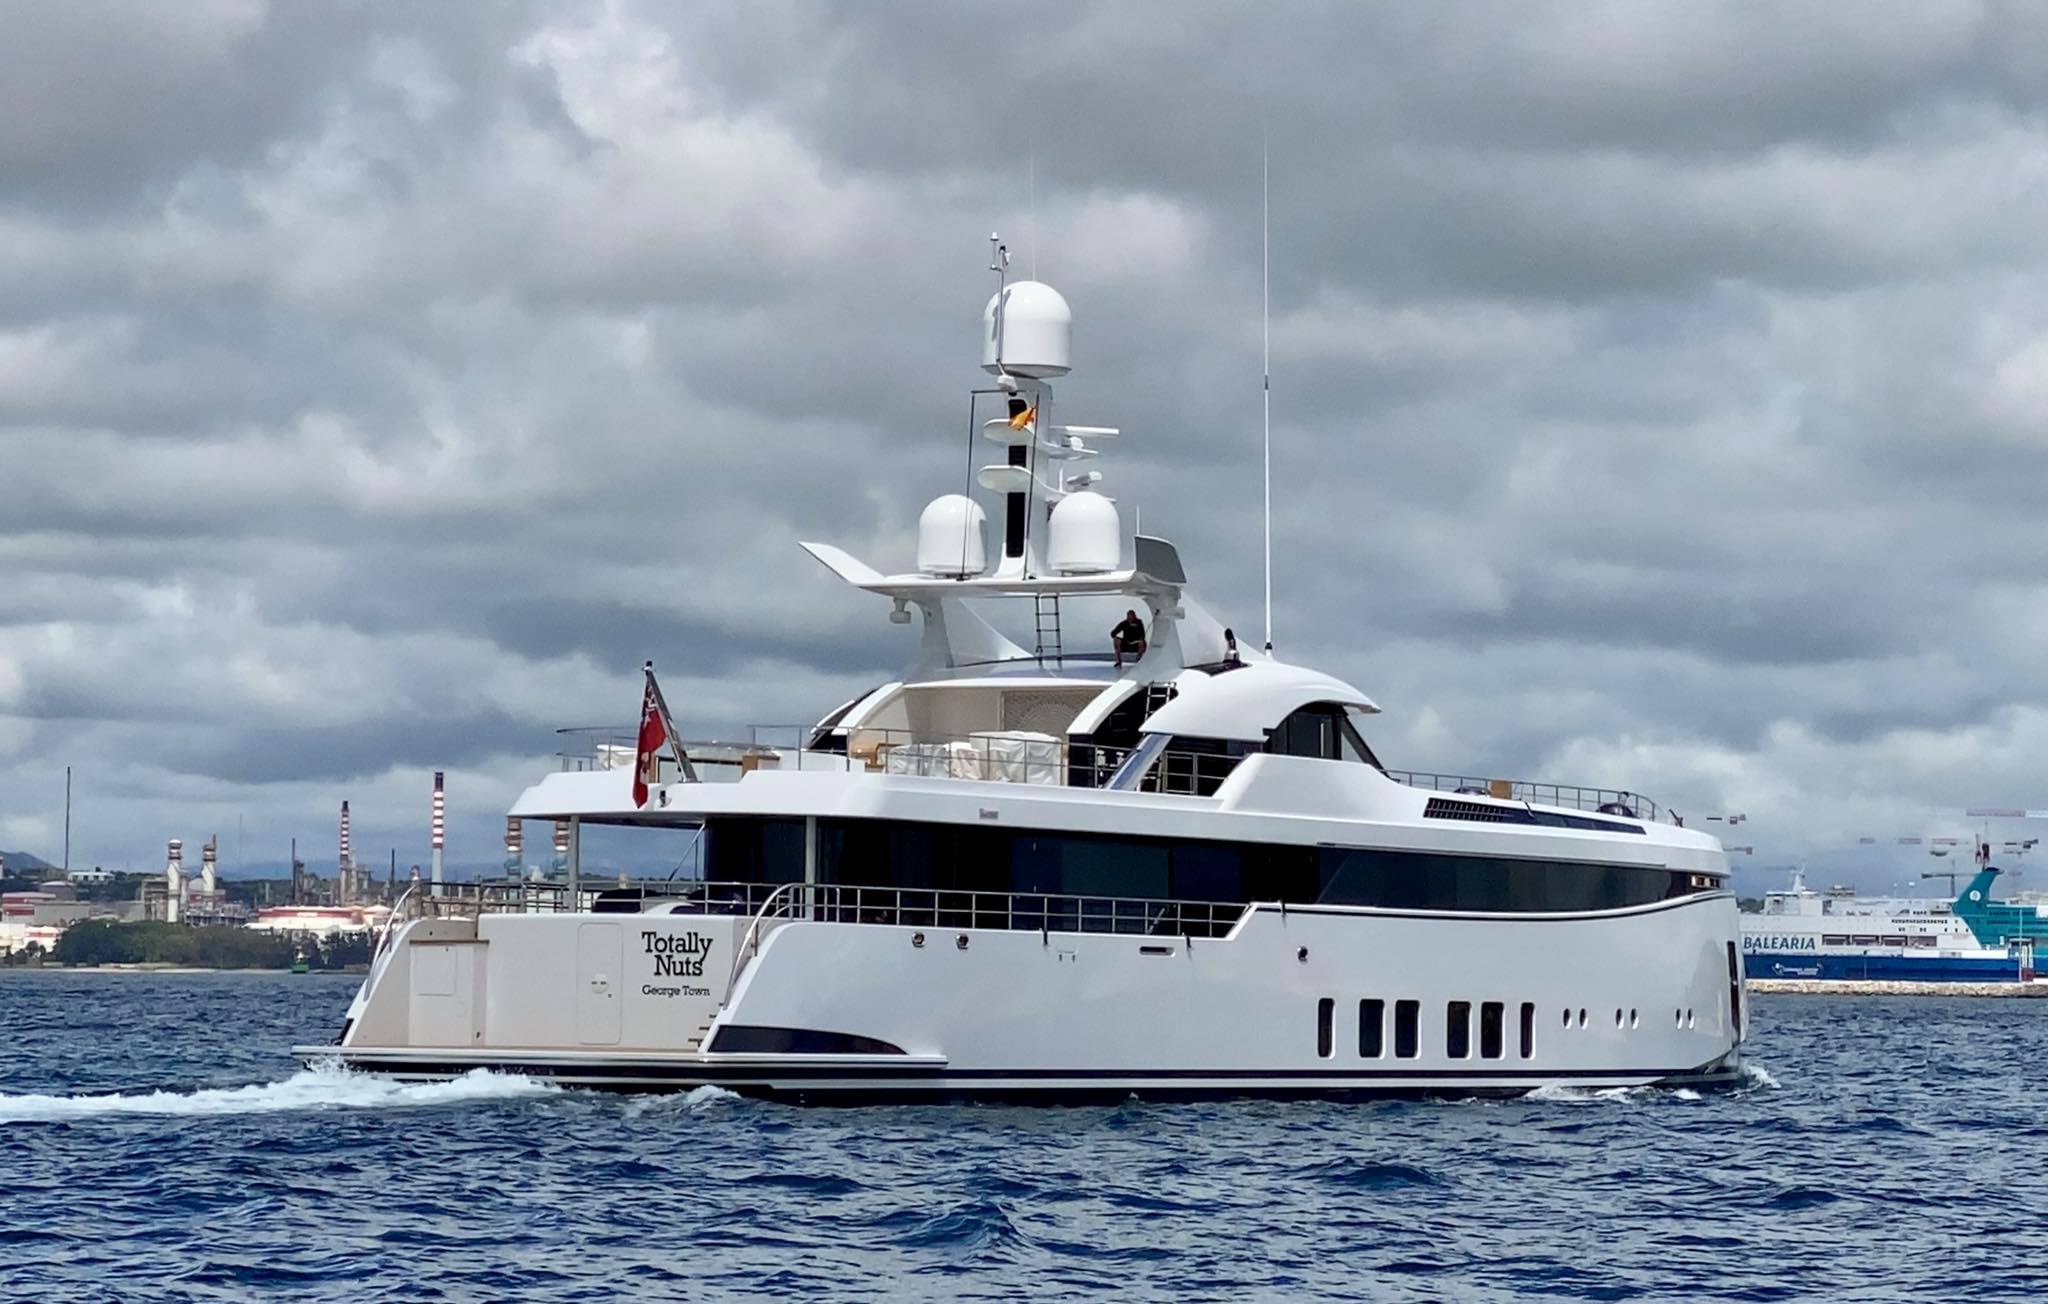 TOTALLY NUTS Yacht • Sarkis Izmirlian $40M Superyacht • Feadship • 2020